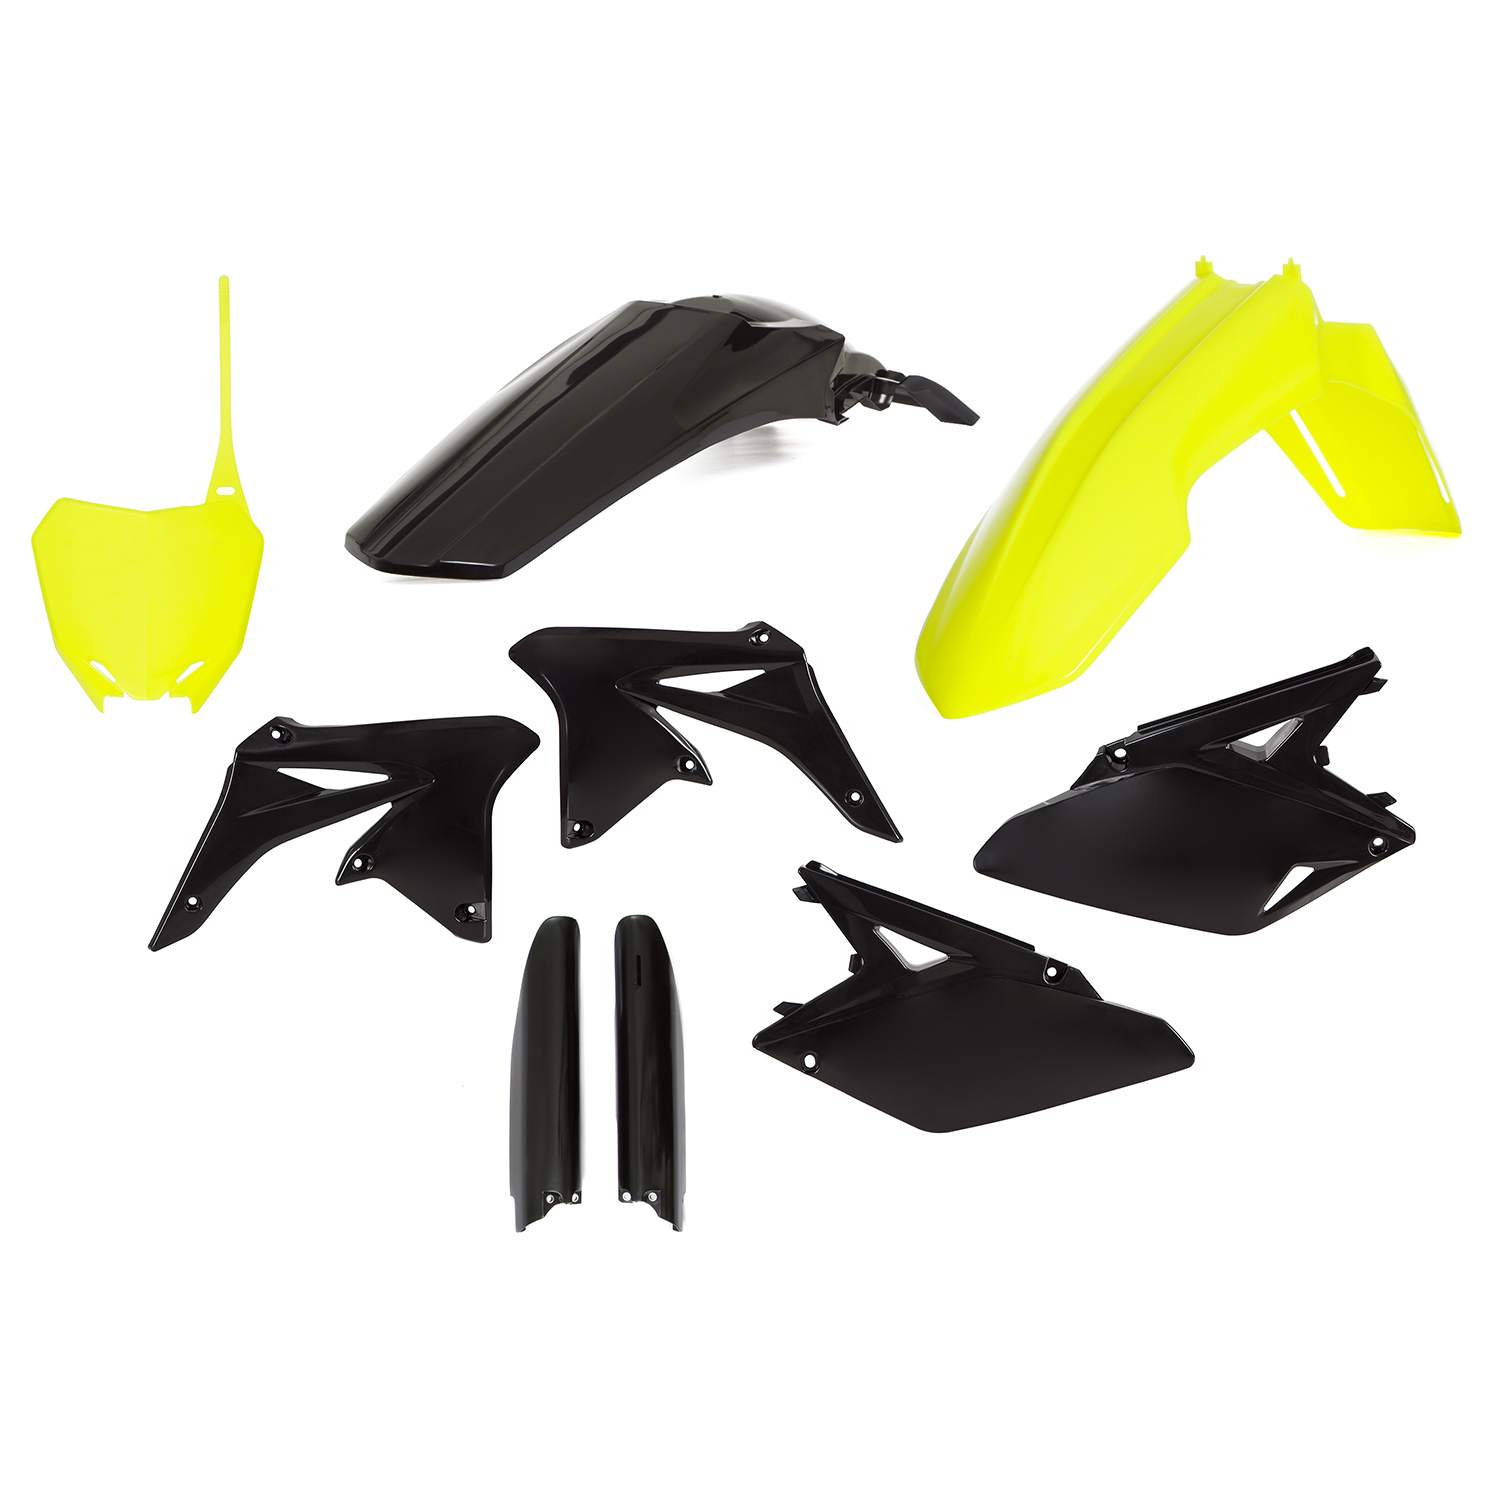 Acerbis Kit Plastiche completo Full-Kit Suzuki RMZ 250 10-17, Giallo Fluo/Nero